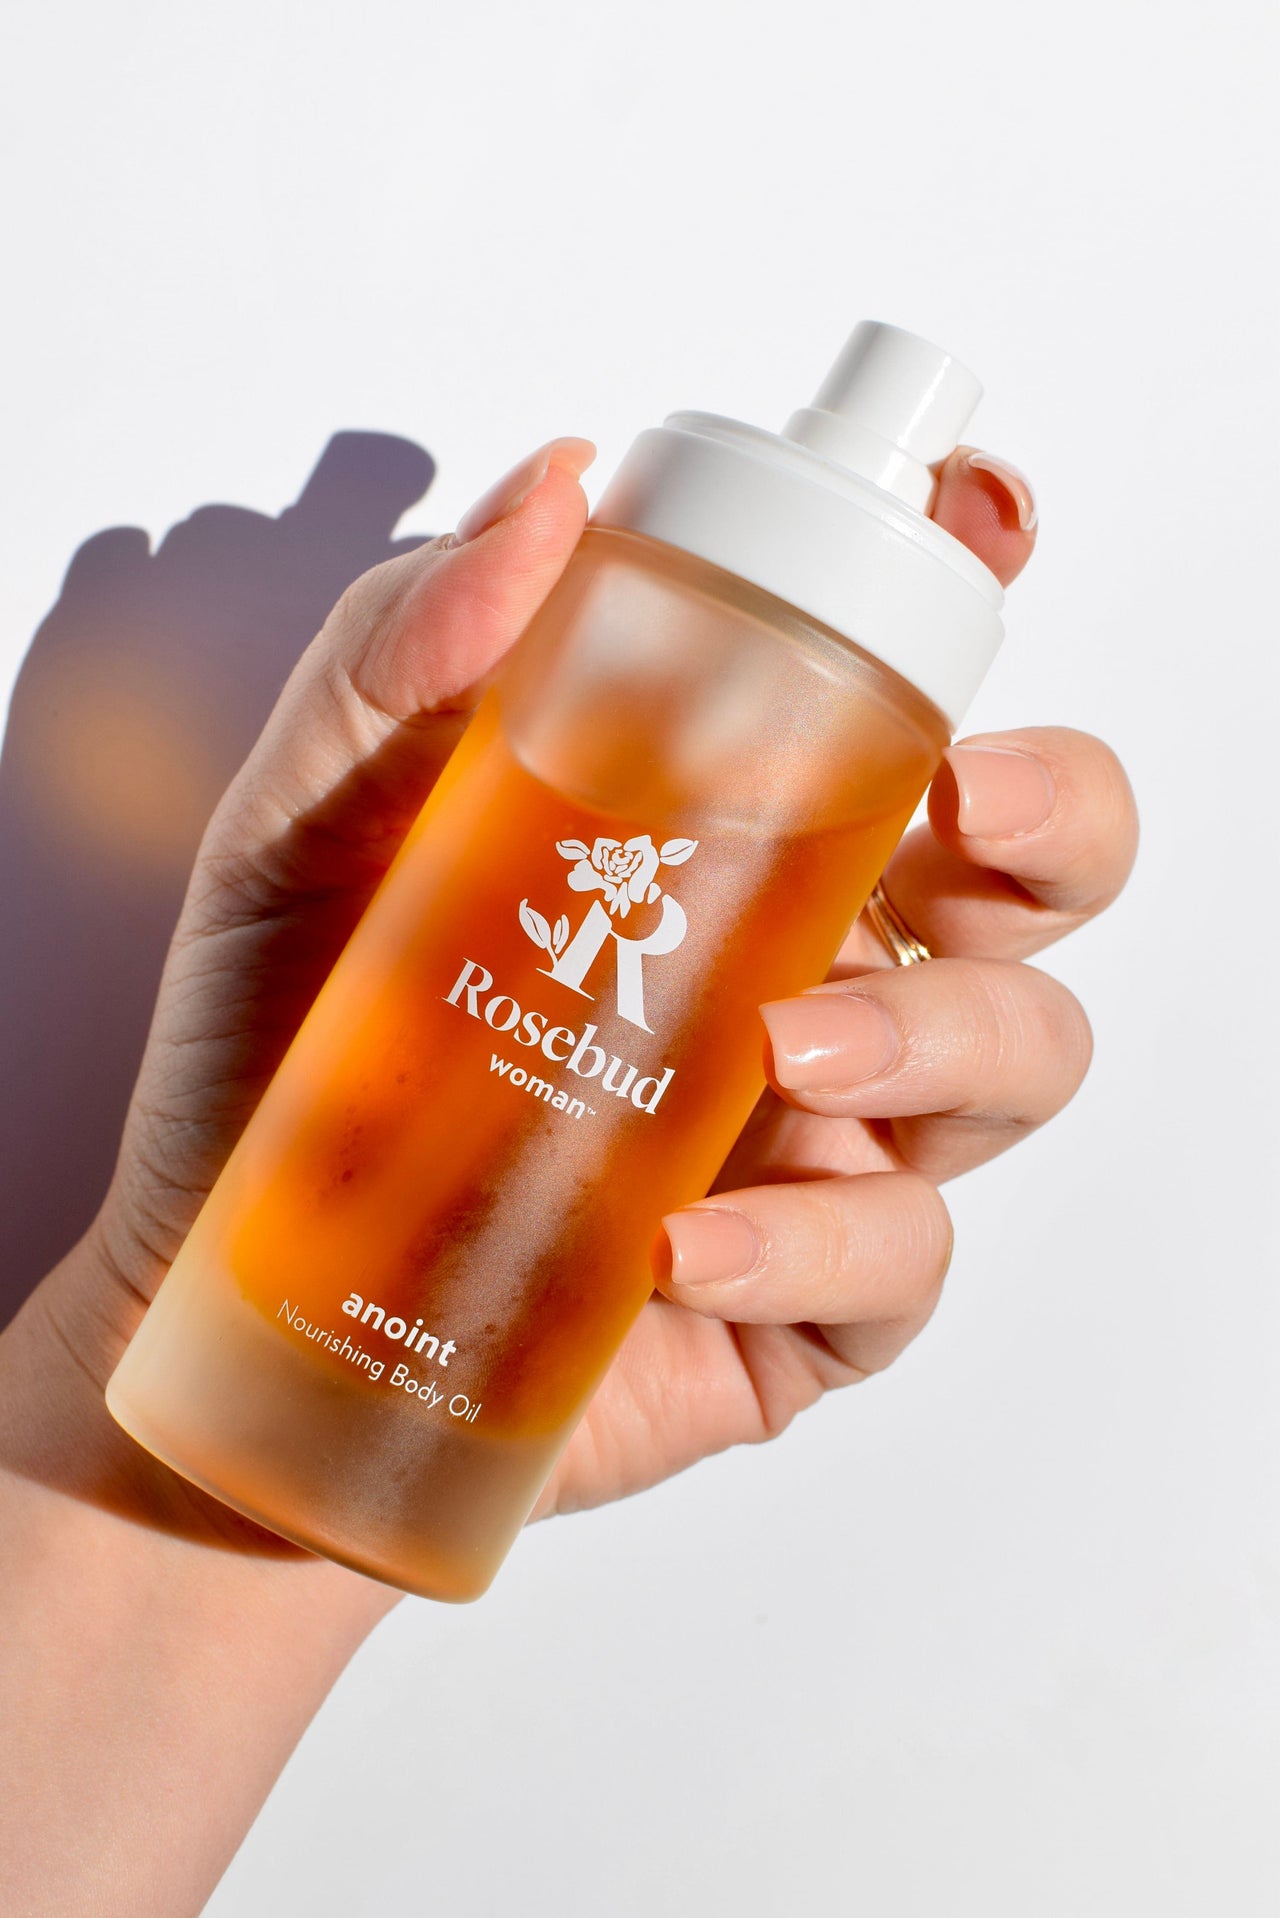 Anoint Nourishing Body Oil Product Image #1 | Rosebud Woman